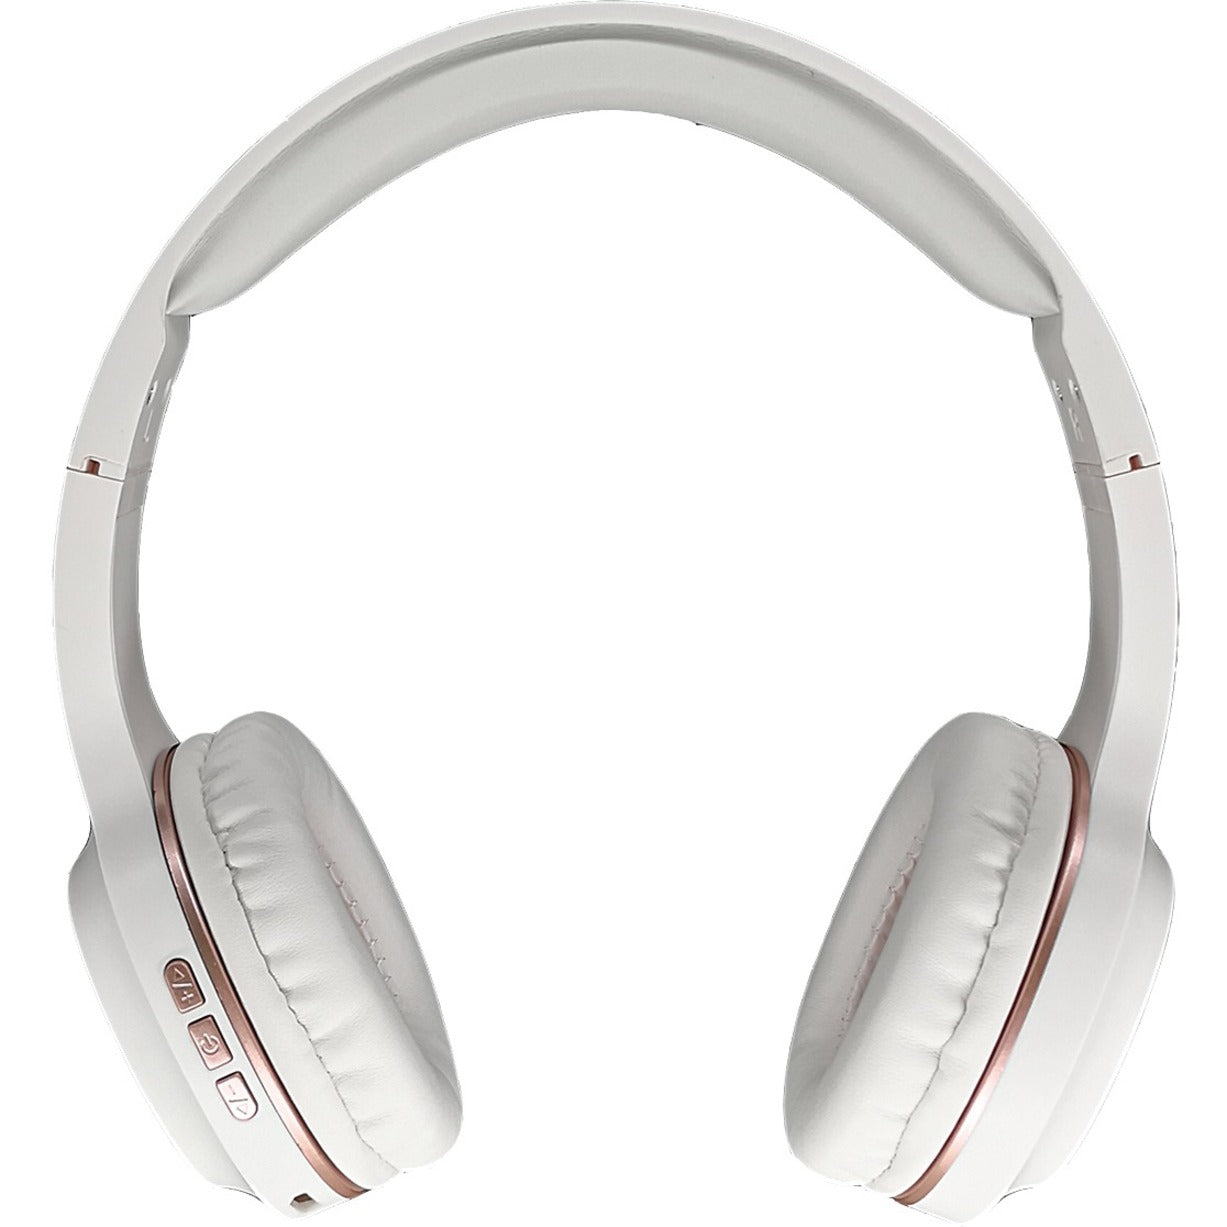 Morpheus 360 HP4500R Wireless Headphone, White/Rose Gold, Comfortable Over-the-Head Design